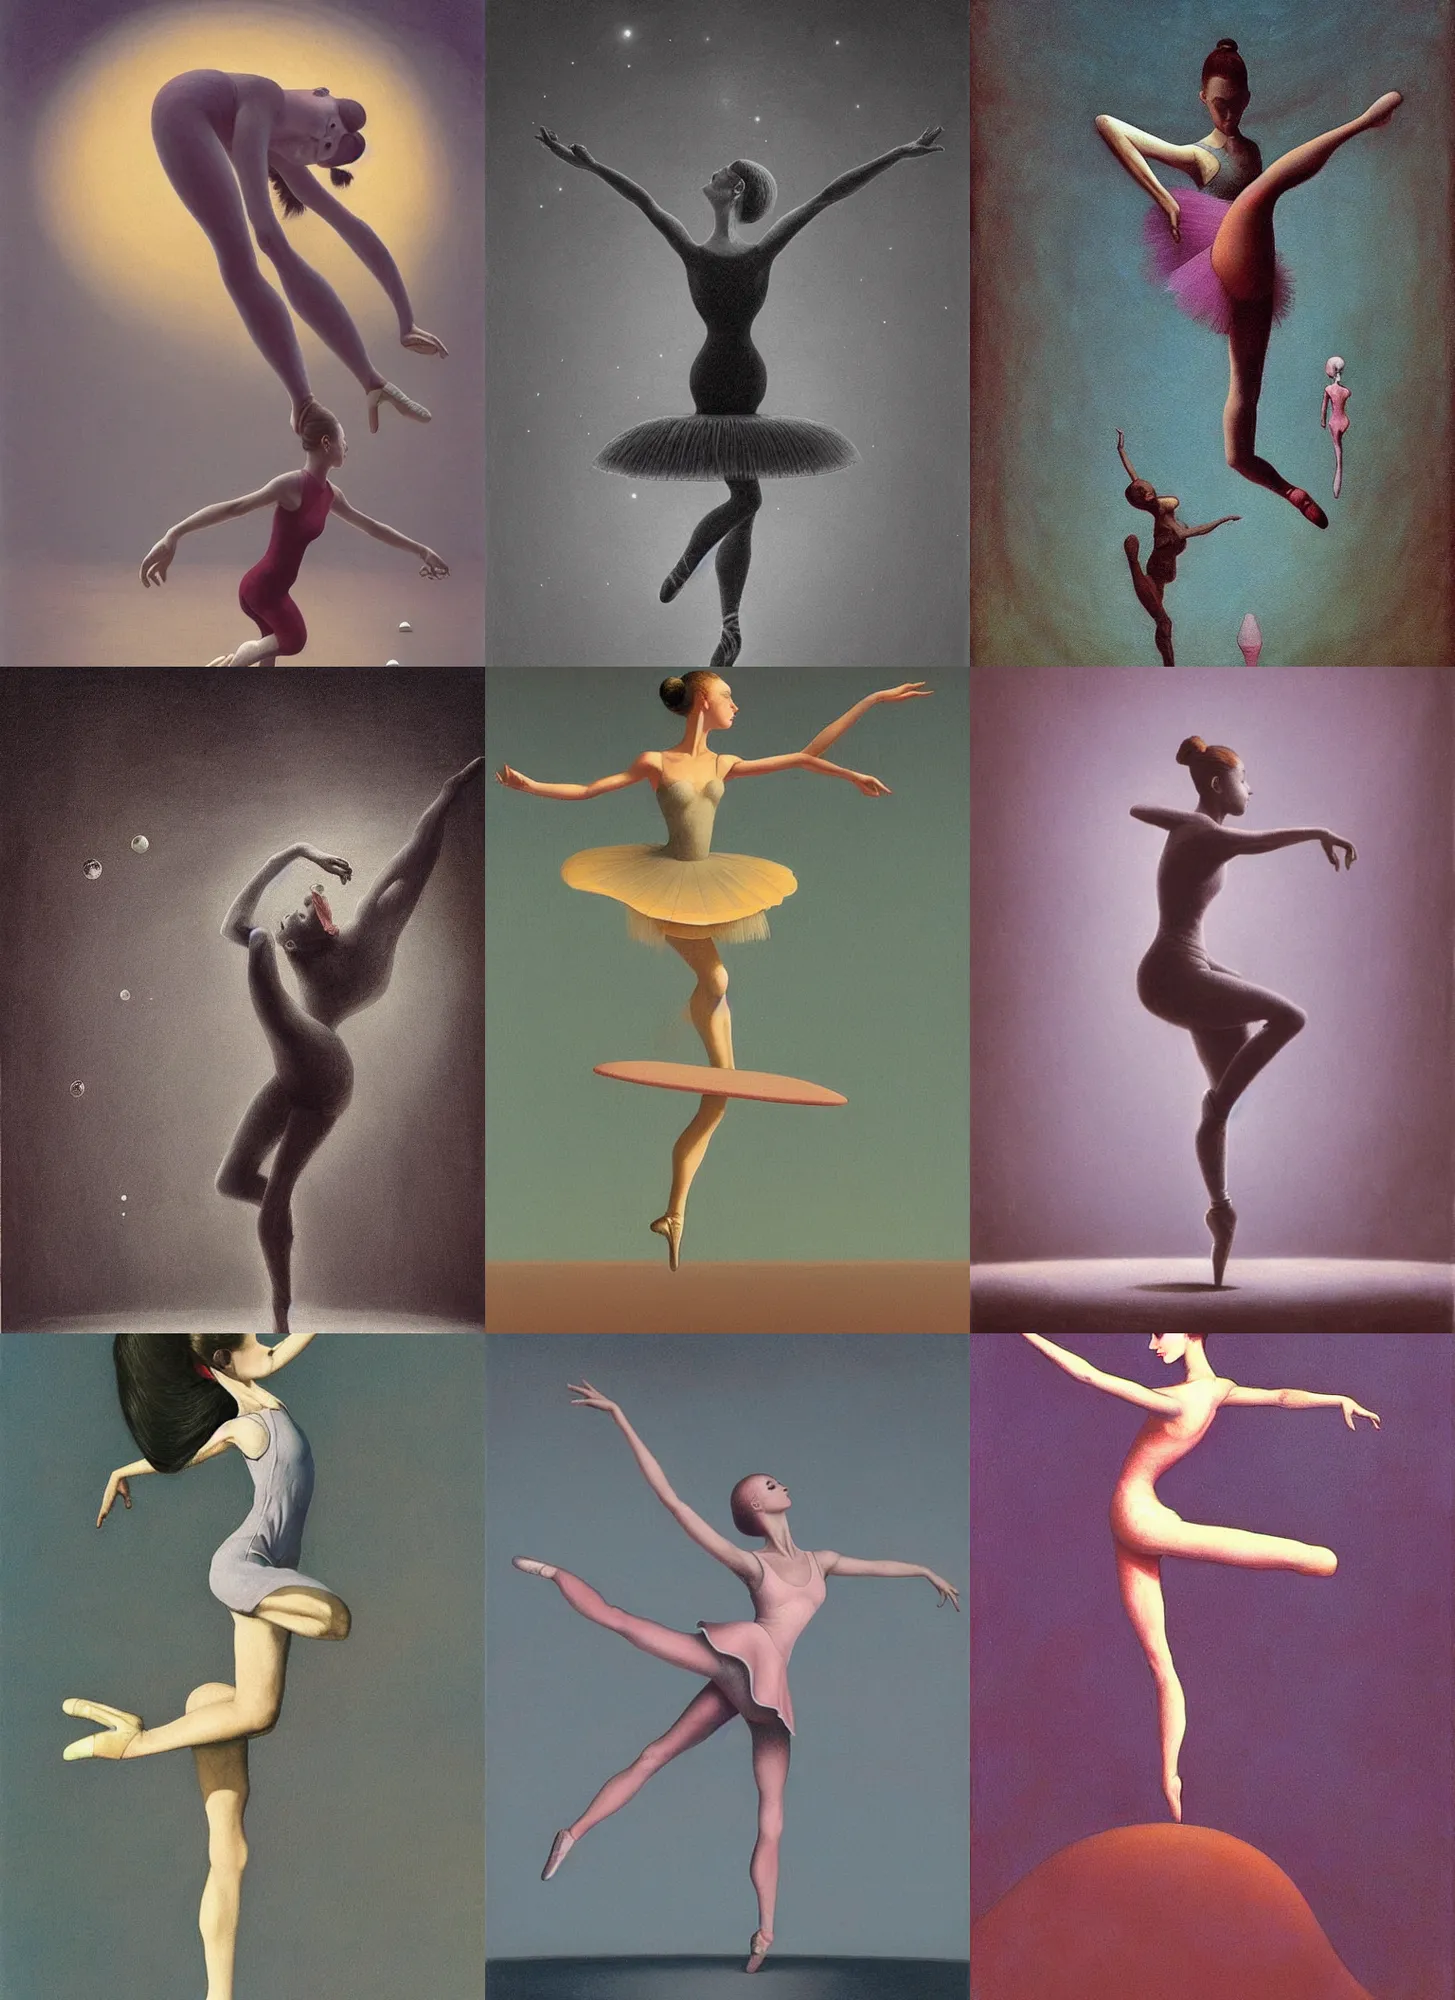 Ballerina poses drawing Vectors & Illustrations for Free Download | Freepik